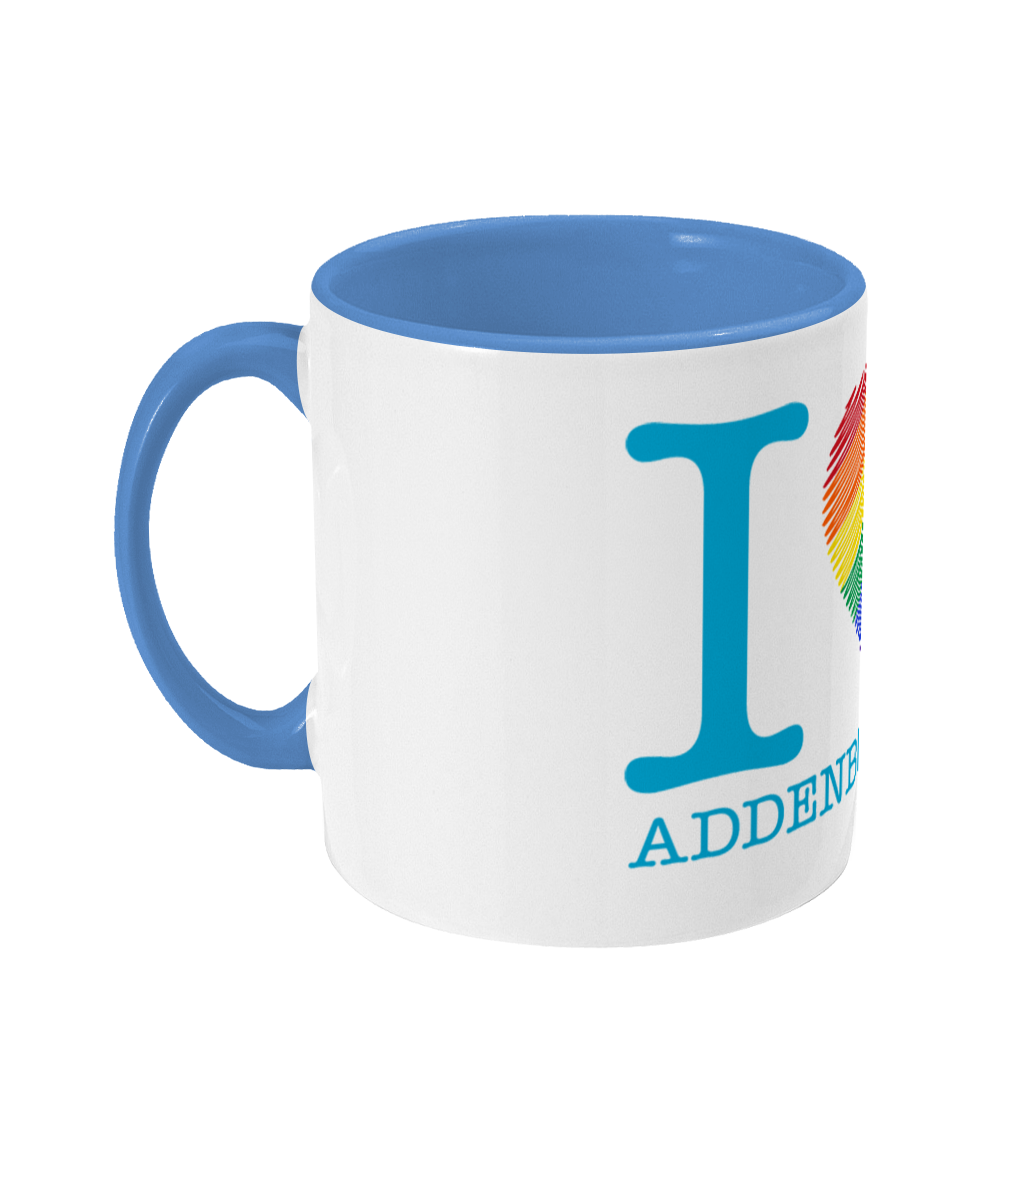 Two Toned I Love Addenbrooke's Mug